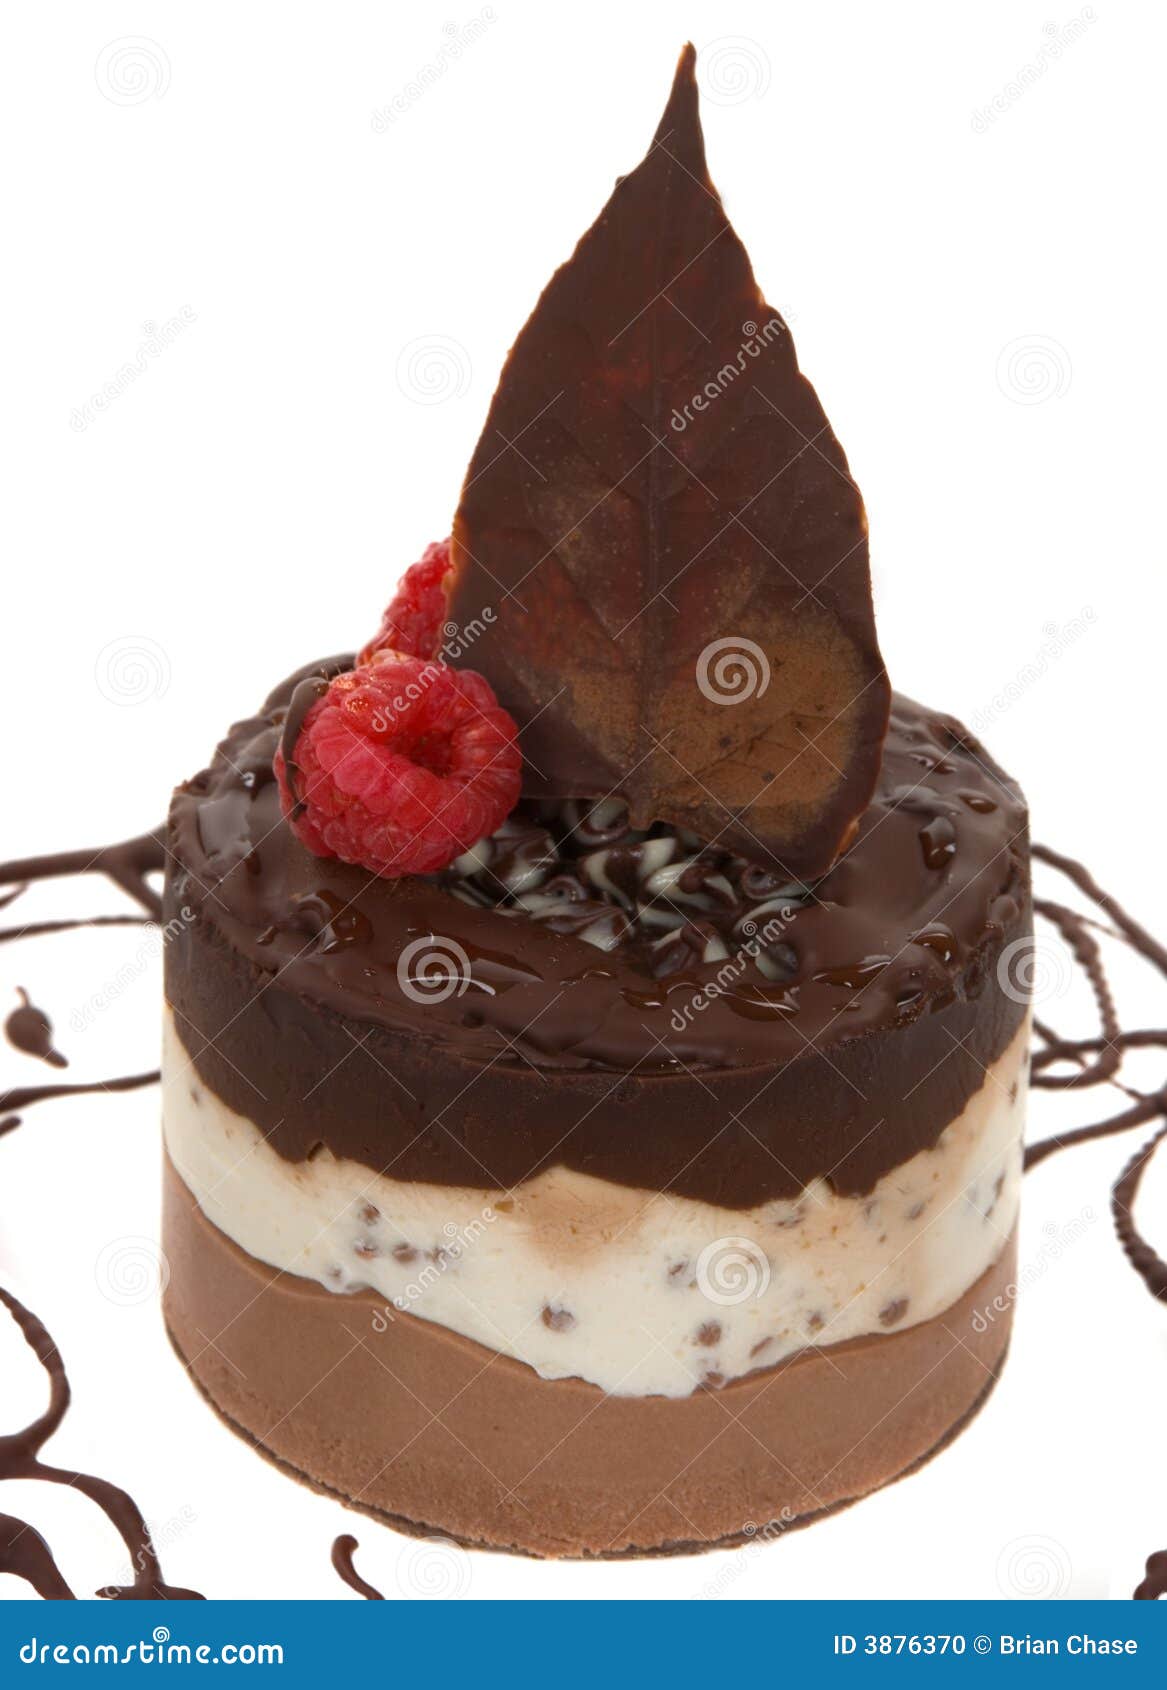 Gourmet Dessert stock photo. Image of bakery, desserts - 3876370